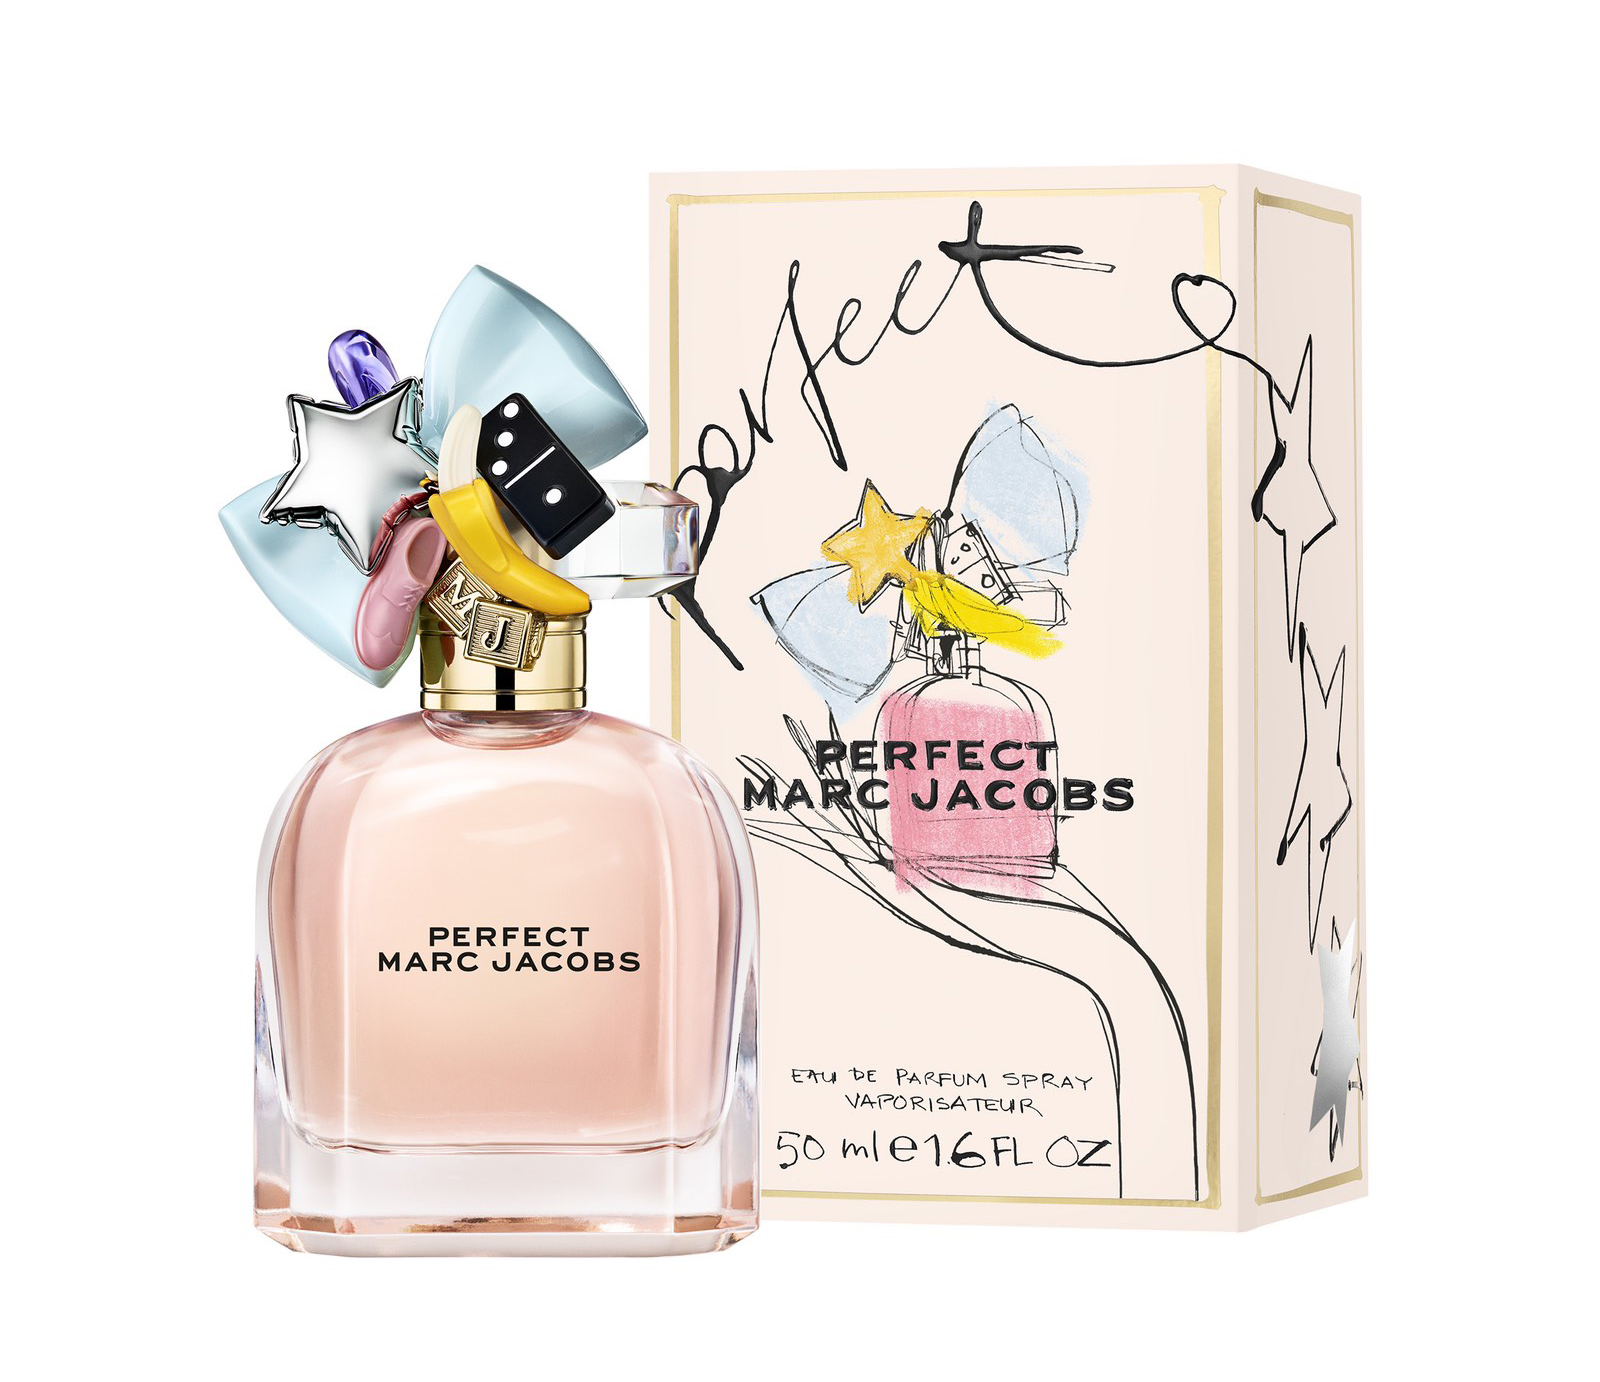 scherp Bemiddelaar liberaal Marc Jacobs Perfect: An Imperfect Soapy Skin Scent ~ Fragrance Reviews